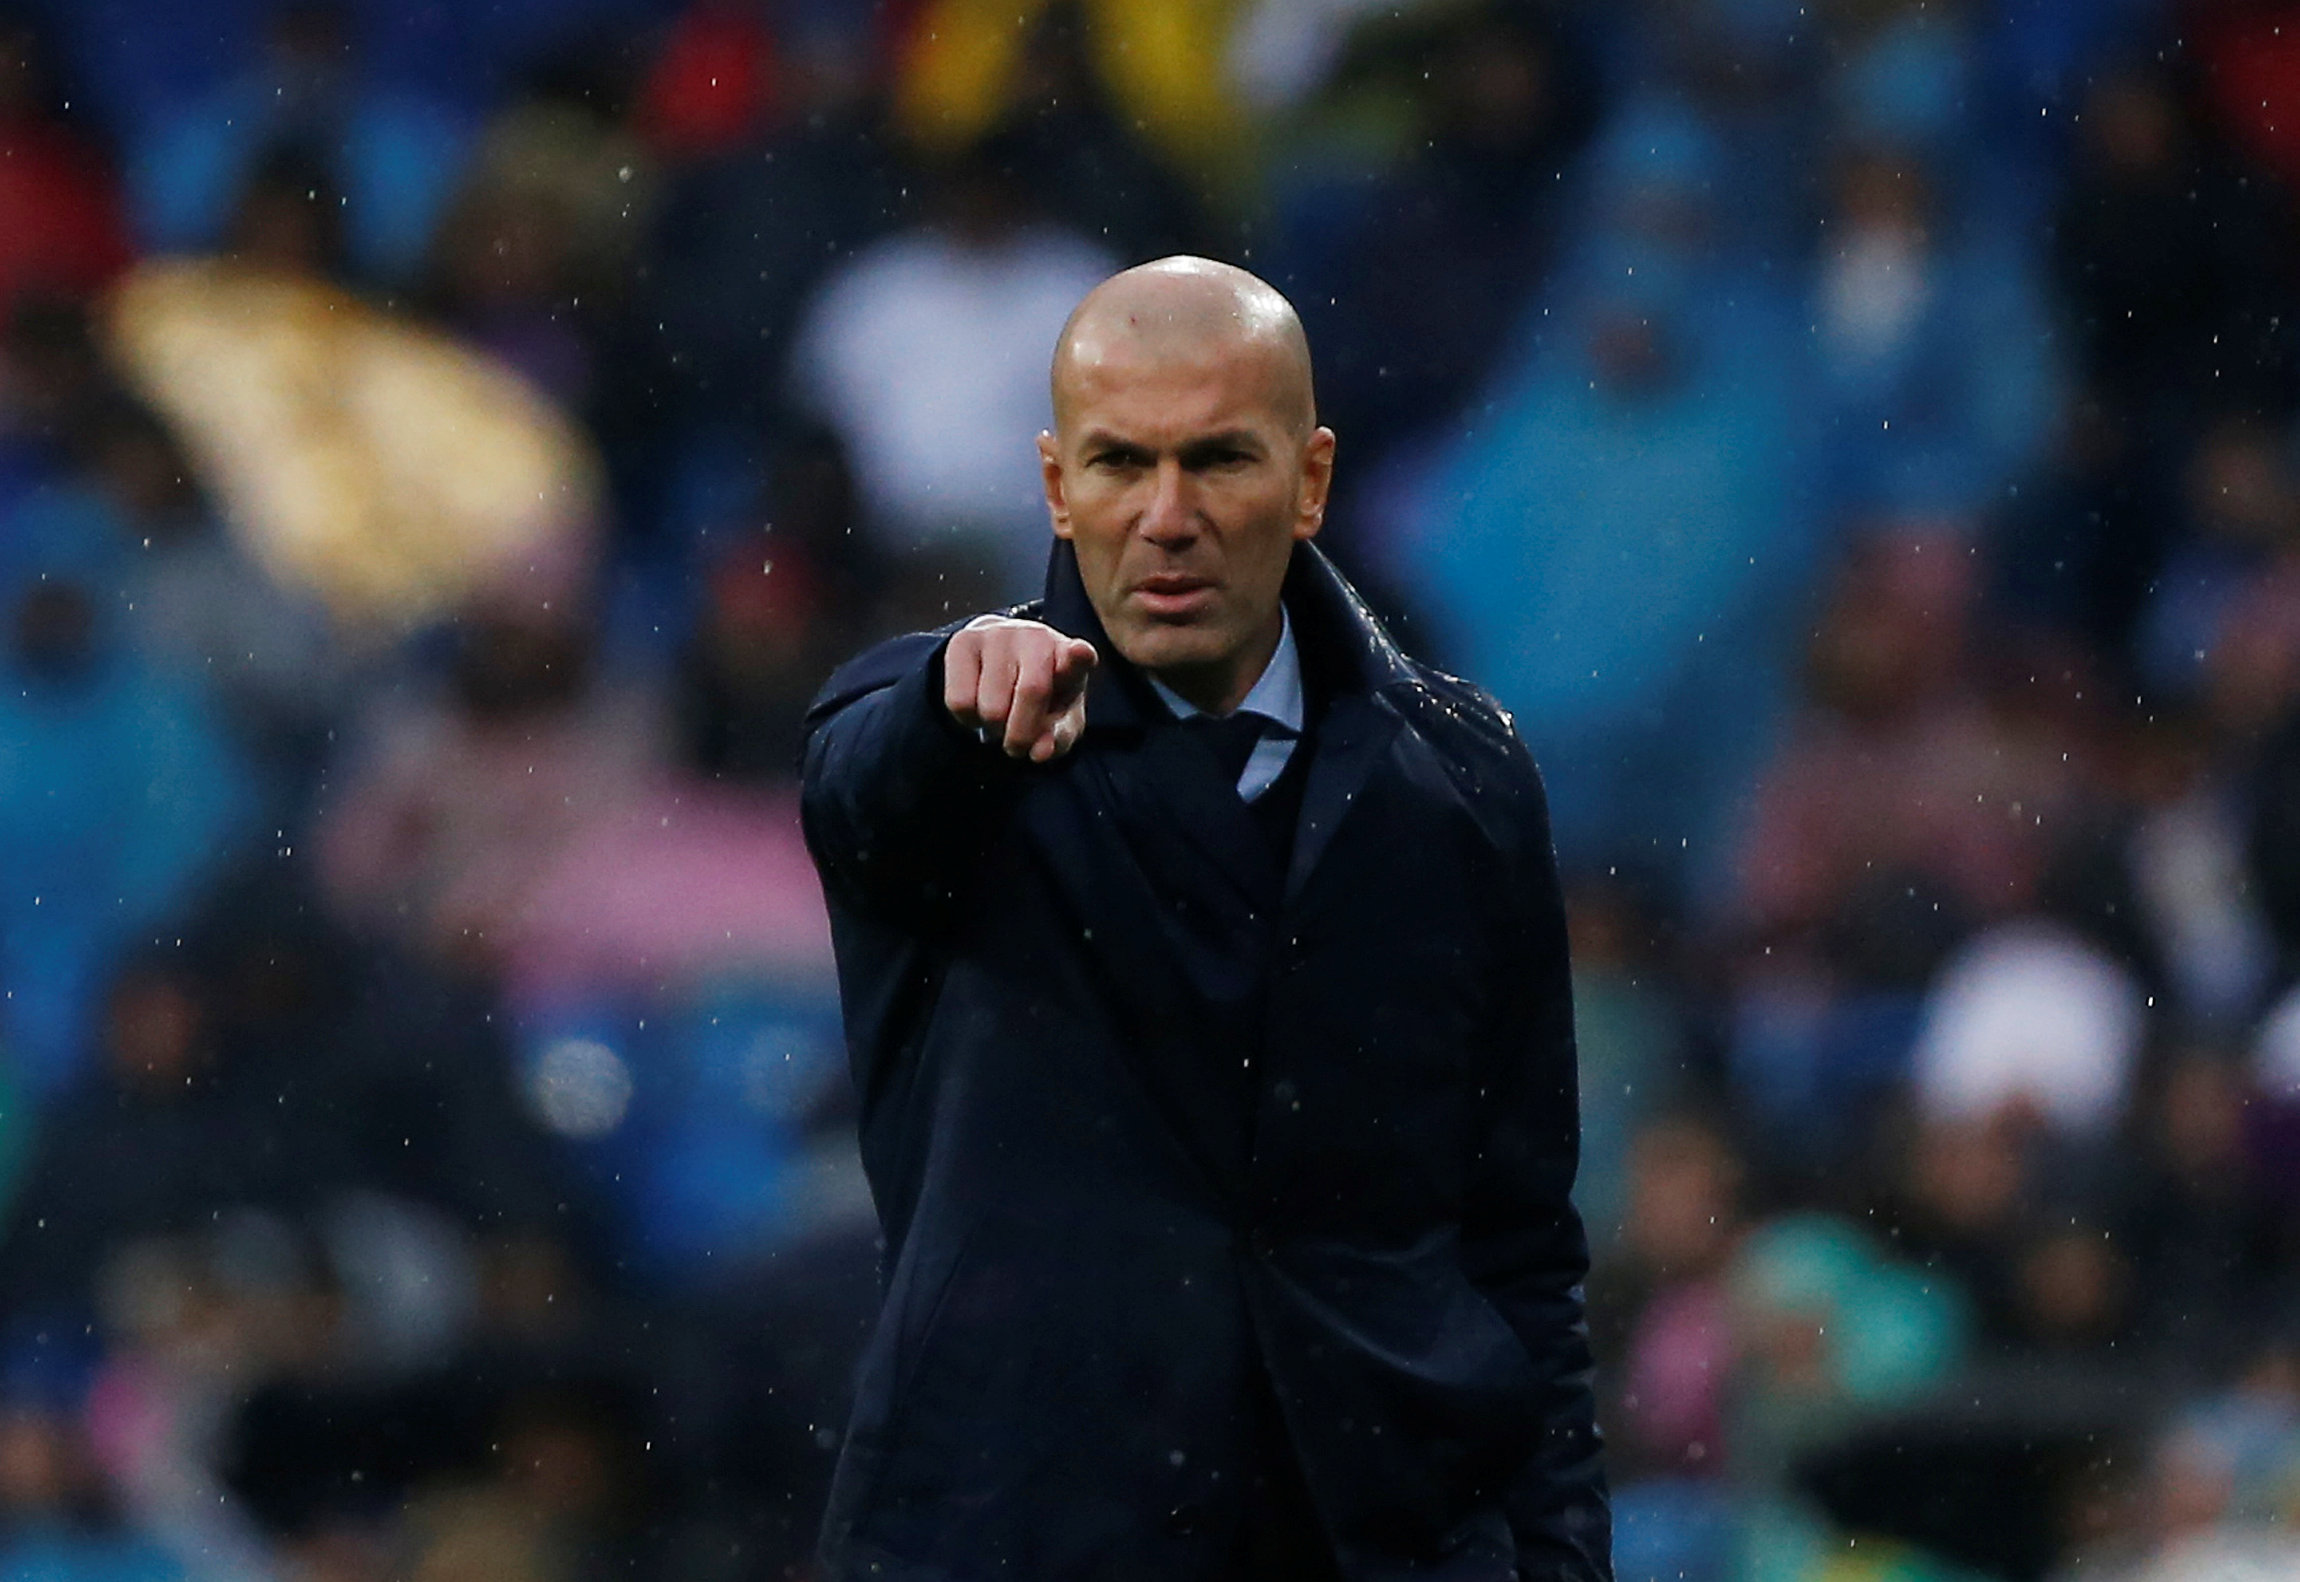 Ronaldo leaving Real beyond imagination, says Zidane